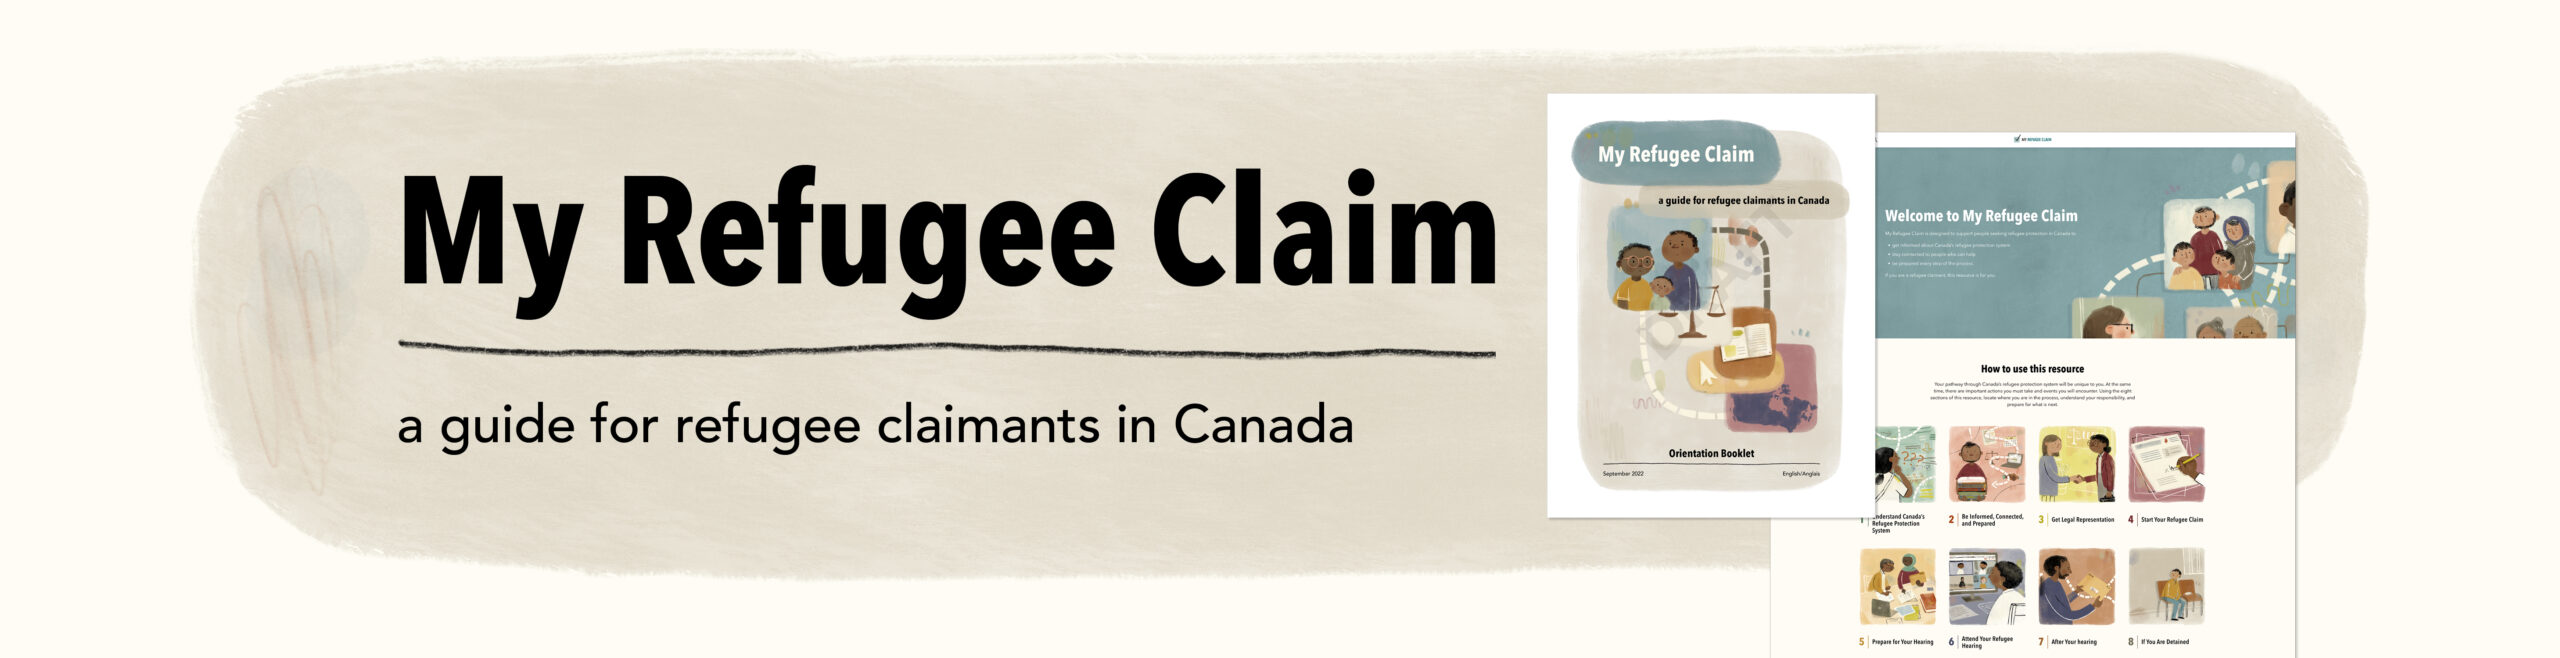 My Refugee Claim